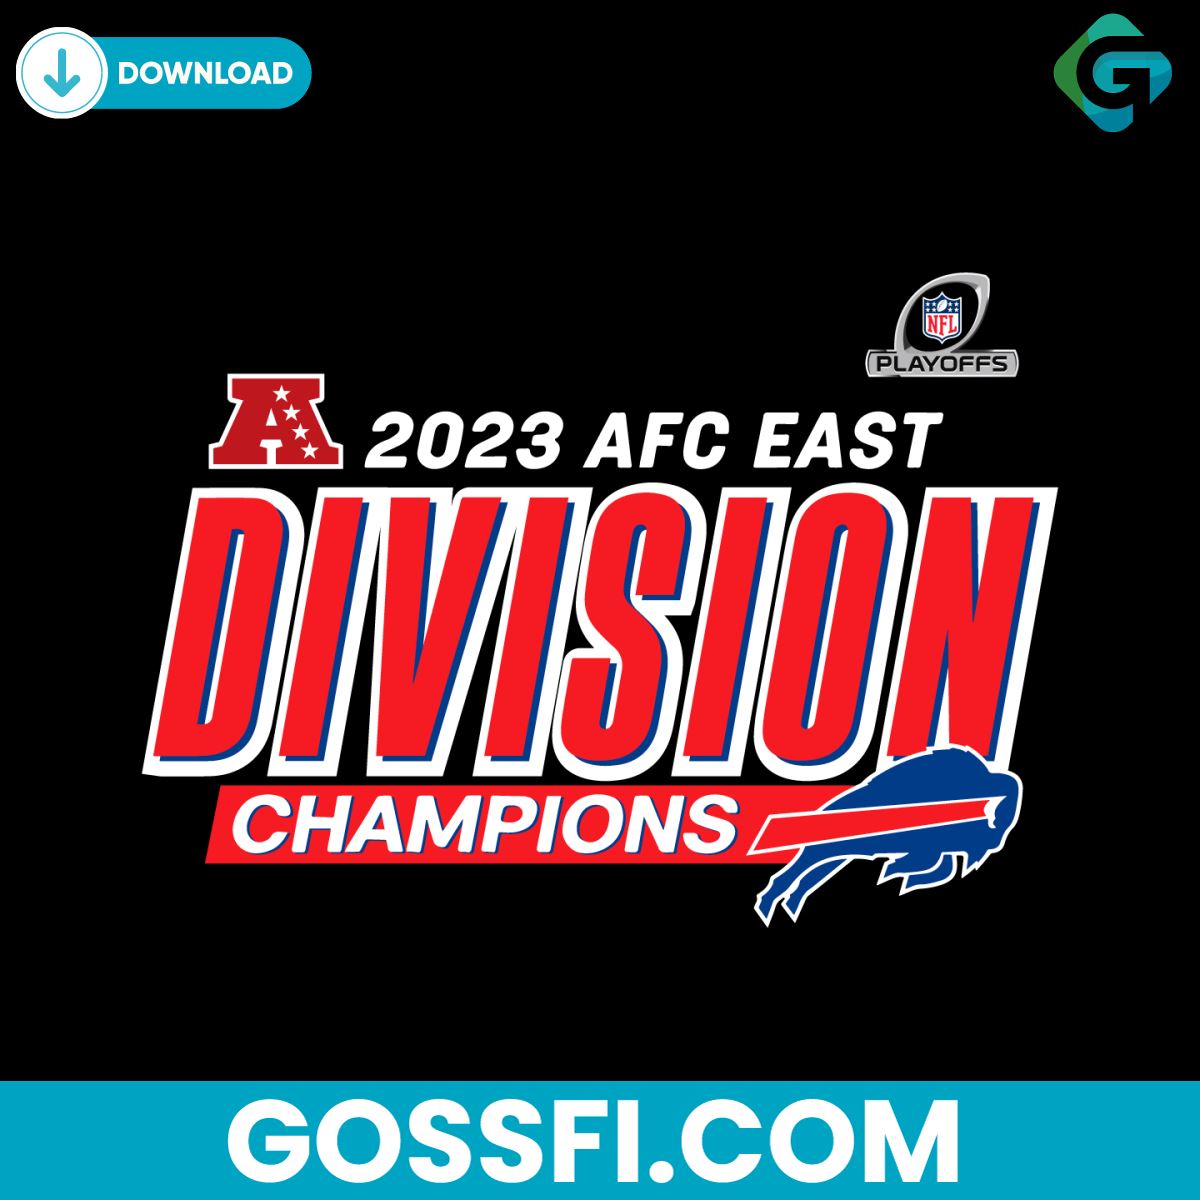 2023-afc-east-division-champions-buffalo-bills-svg